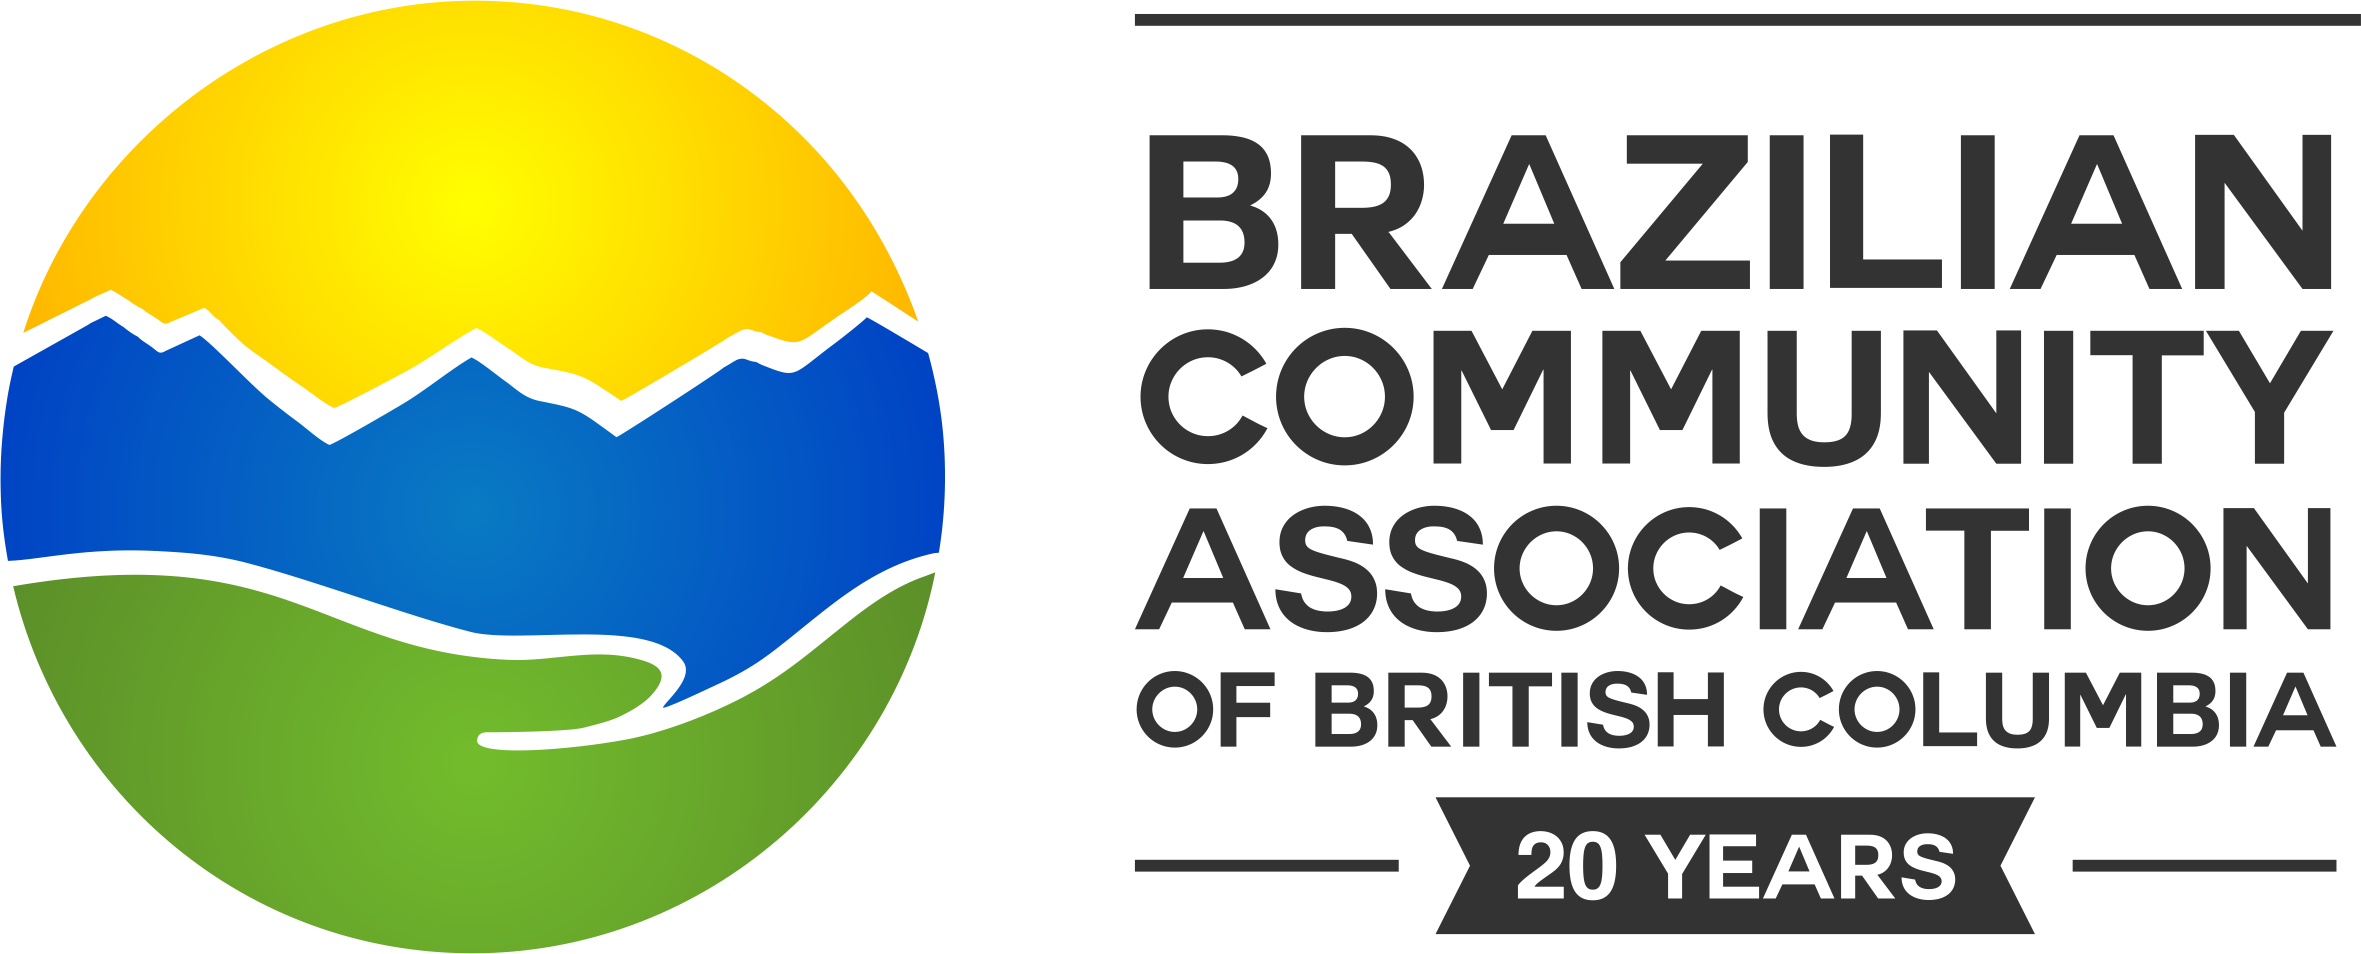 brazilian community association british columbia